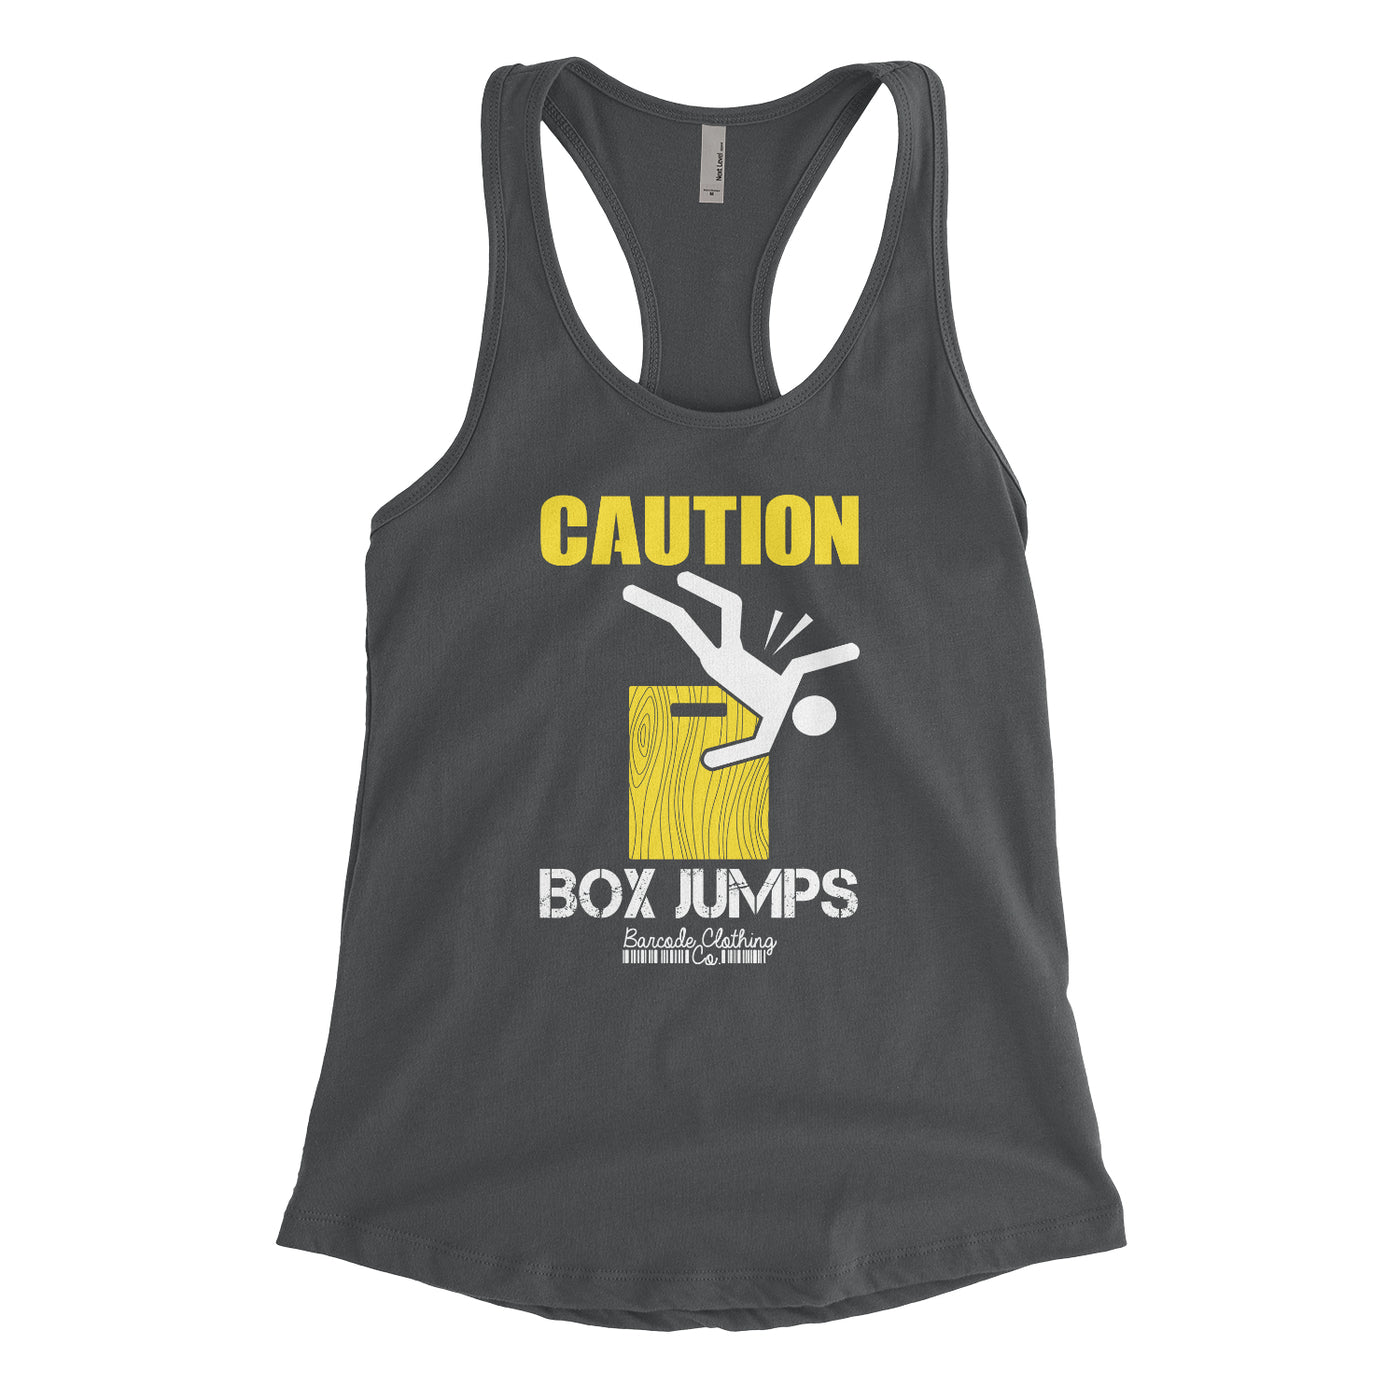 Caution Box Jumps